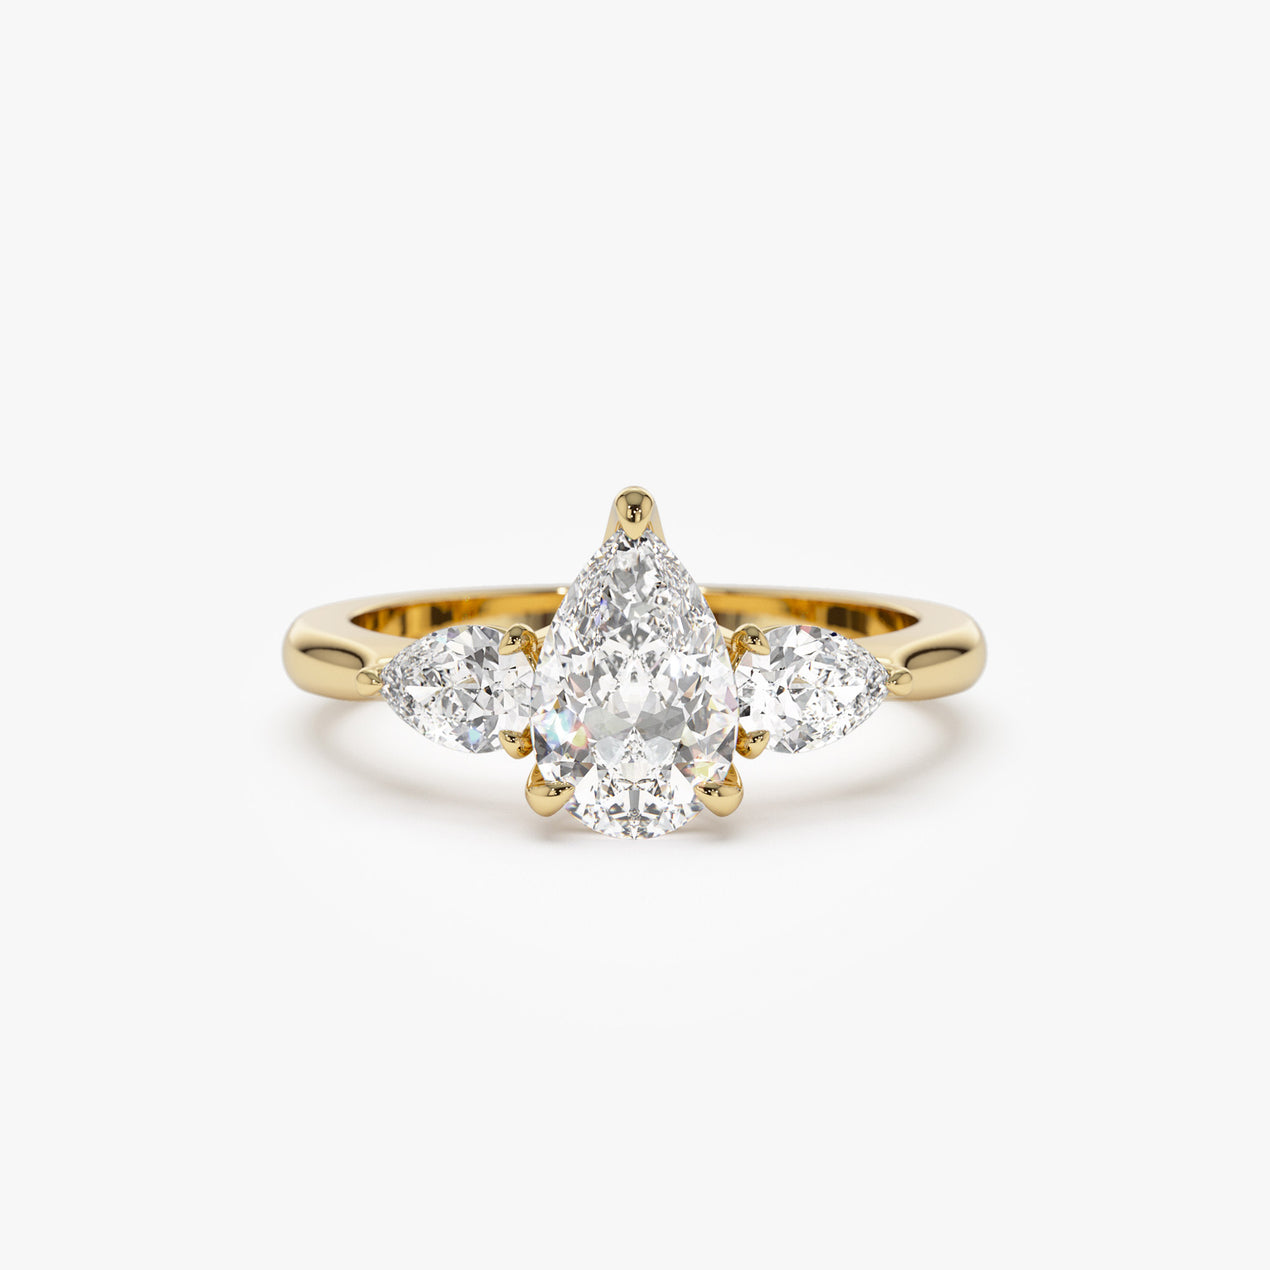 Emma Three-Stone Ring